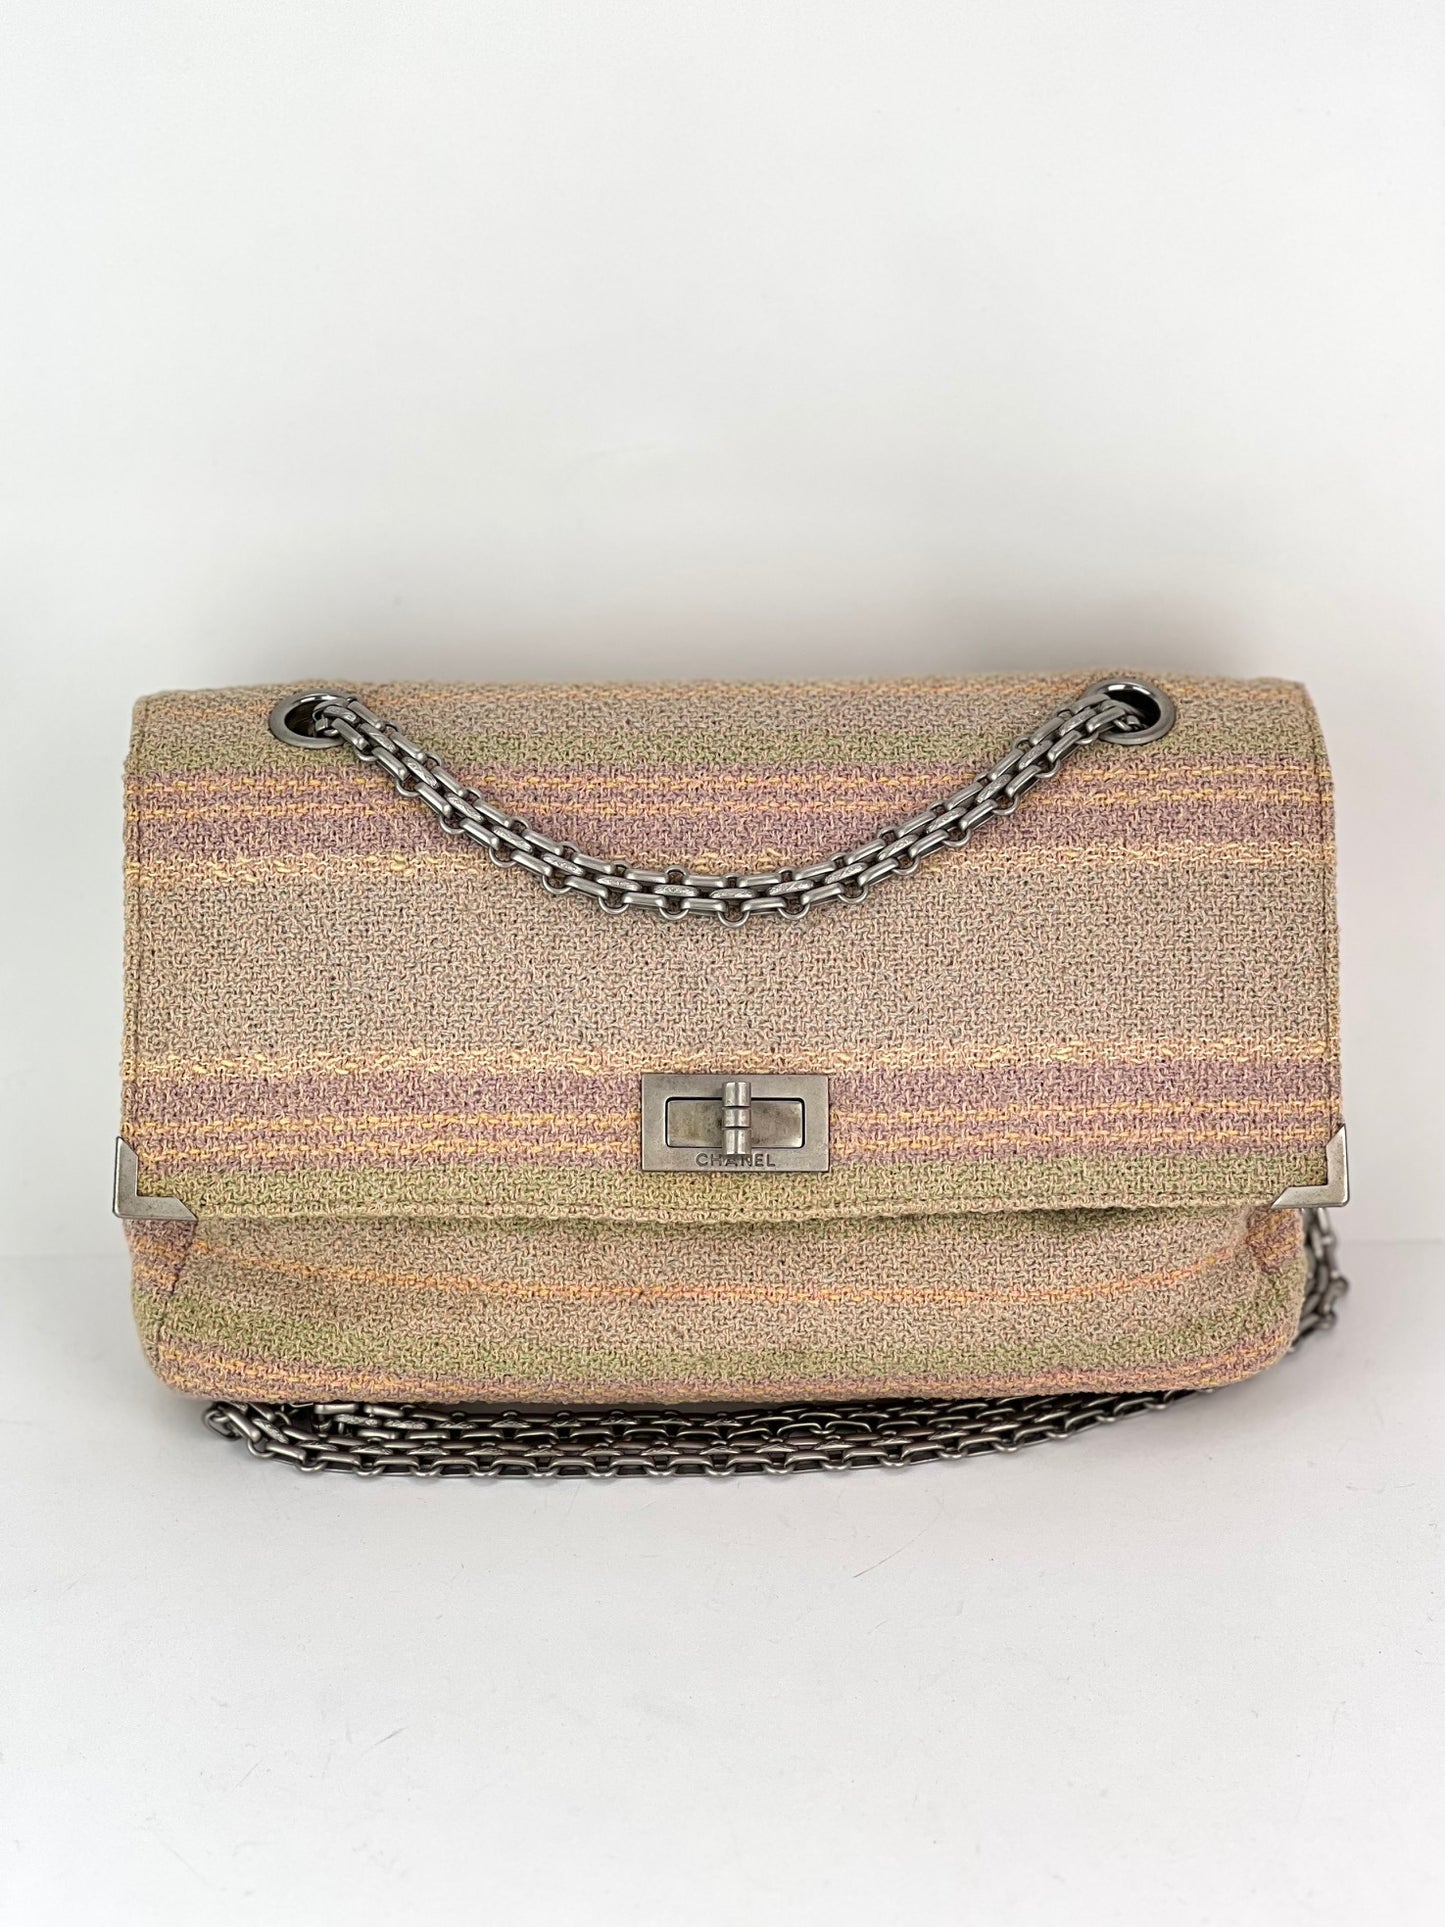 Chanel Authenticated Tweed Handbag